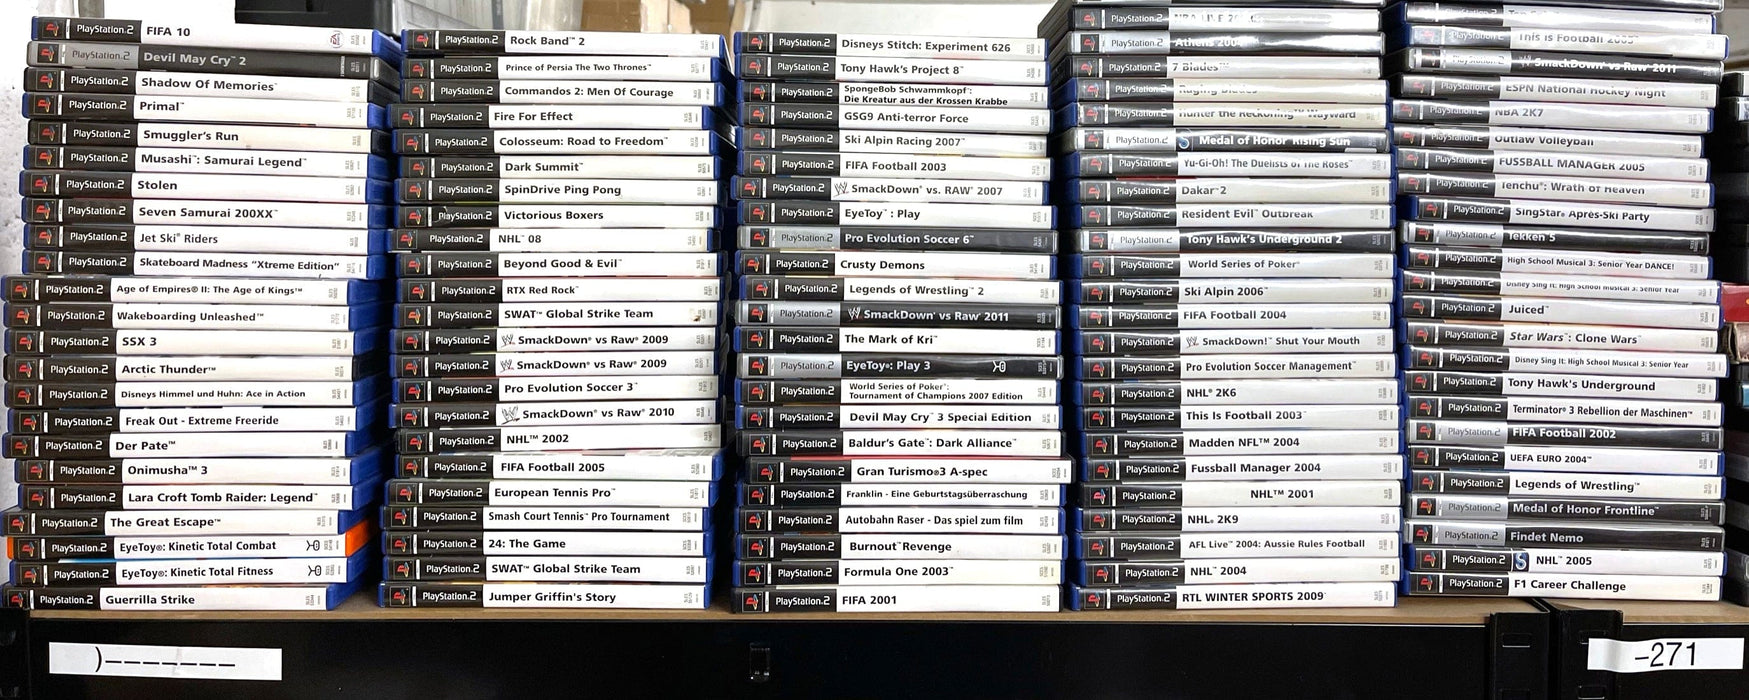 Glaciergames PlayStation 2 Game Der Herr der Ringe: Die zwei Türme PlayStation 2 (Nr.856)